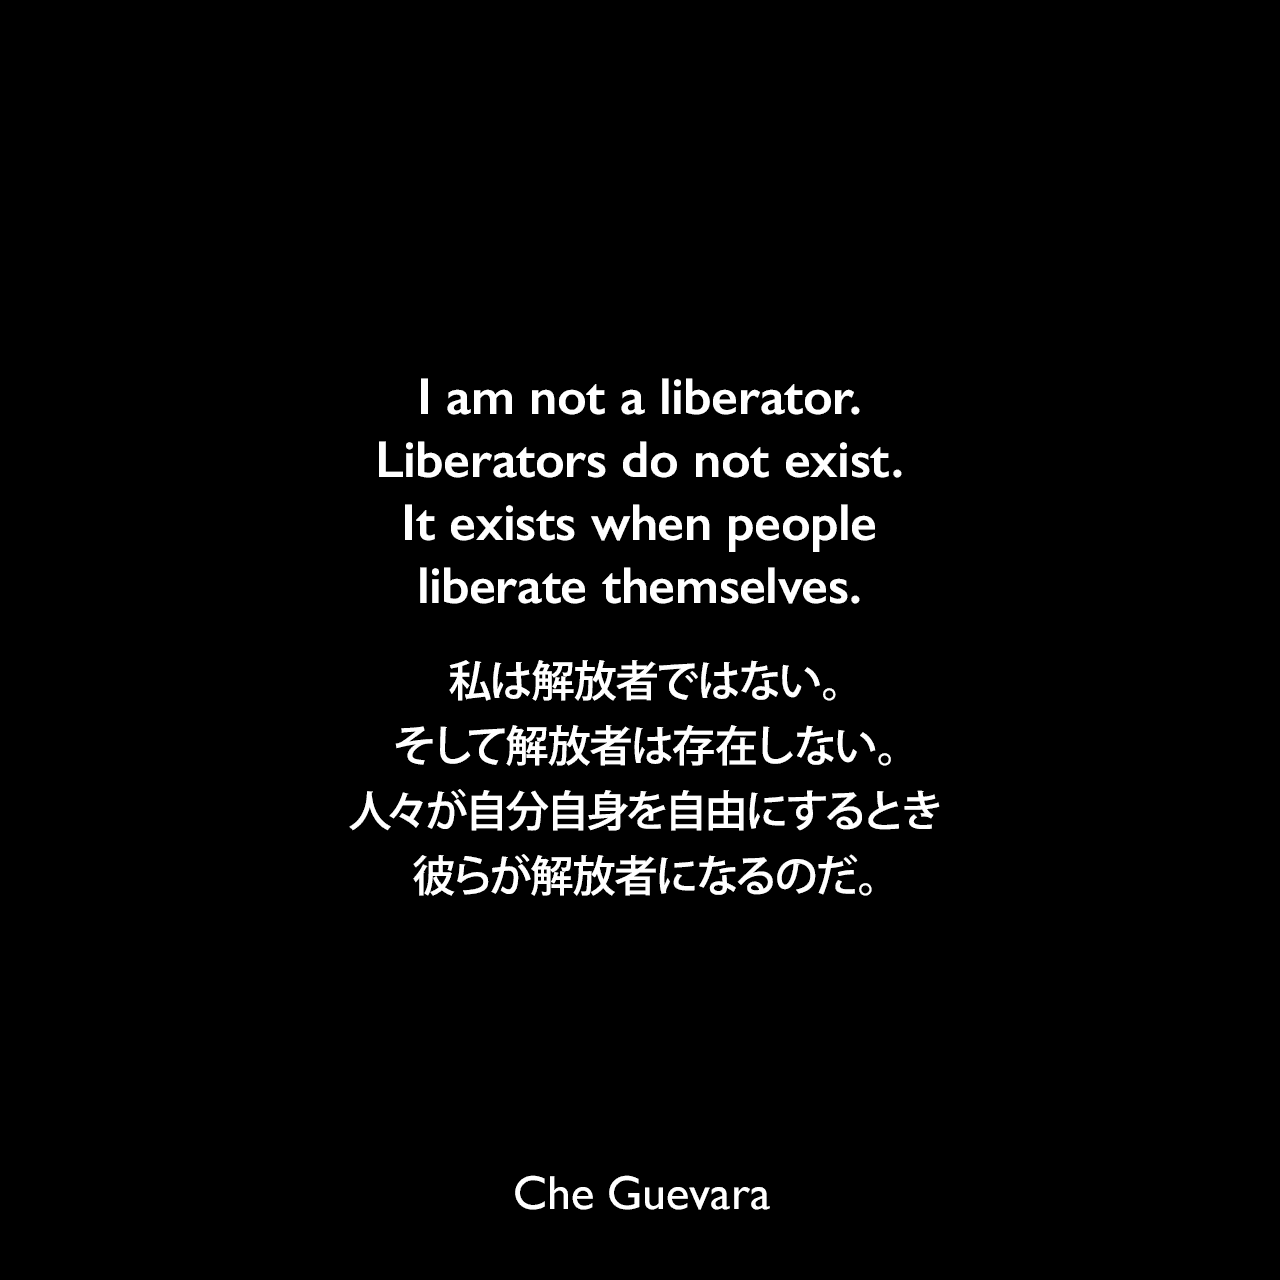 I am not a liberator. Liberators do not exist. It exists when people liberate themselves.私は解放者ではない。そして解放者は存在しない。人々が自分自身を自由にするとき彼らが解放者になるのだ。- 1958年メキシコでのゲバラの声明よりChe Guevara